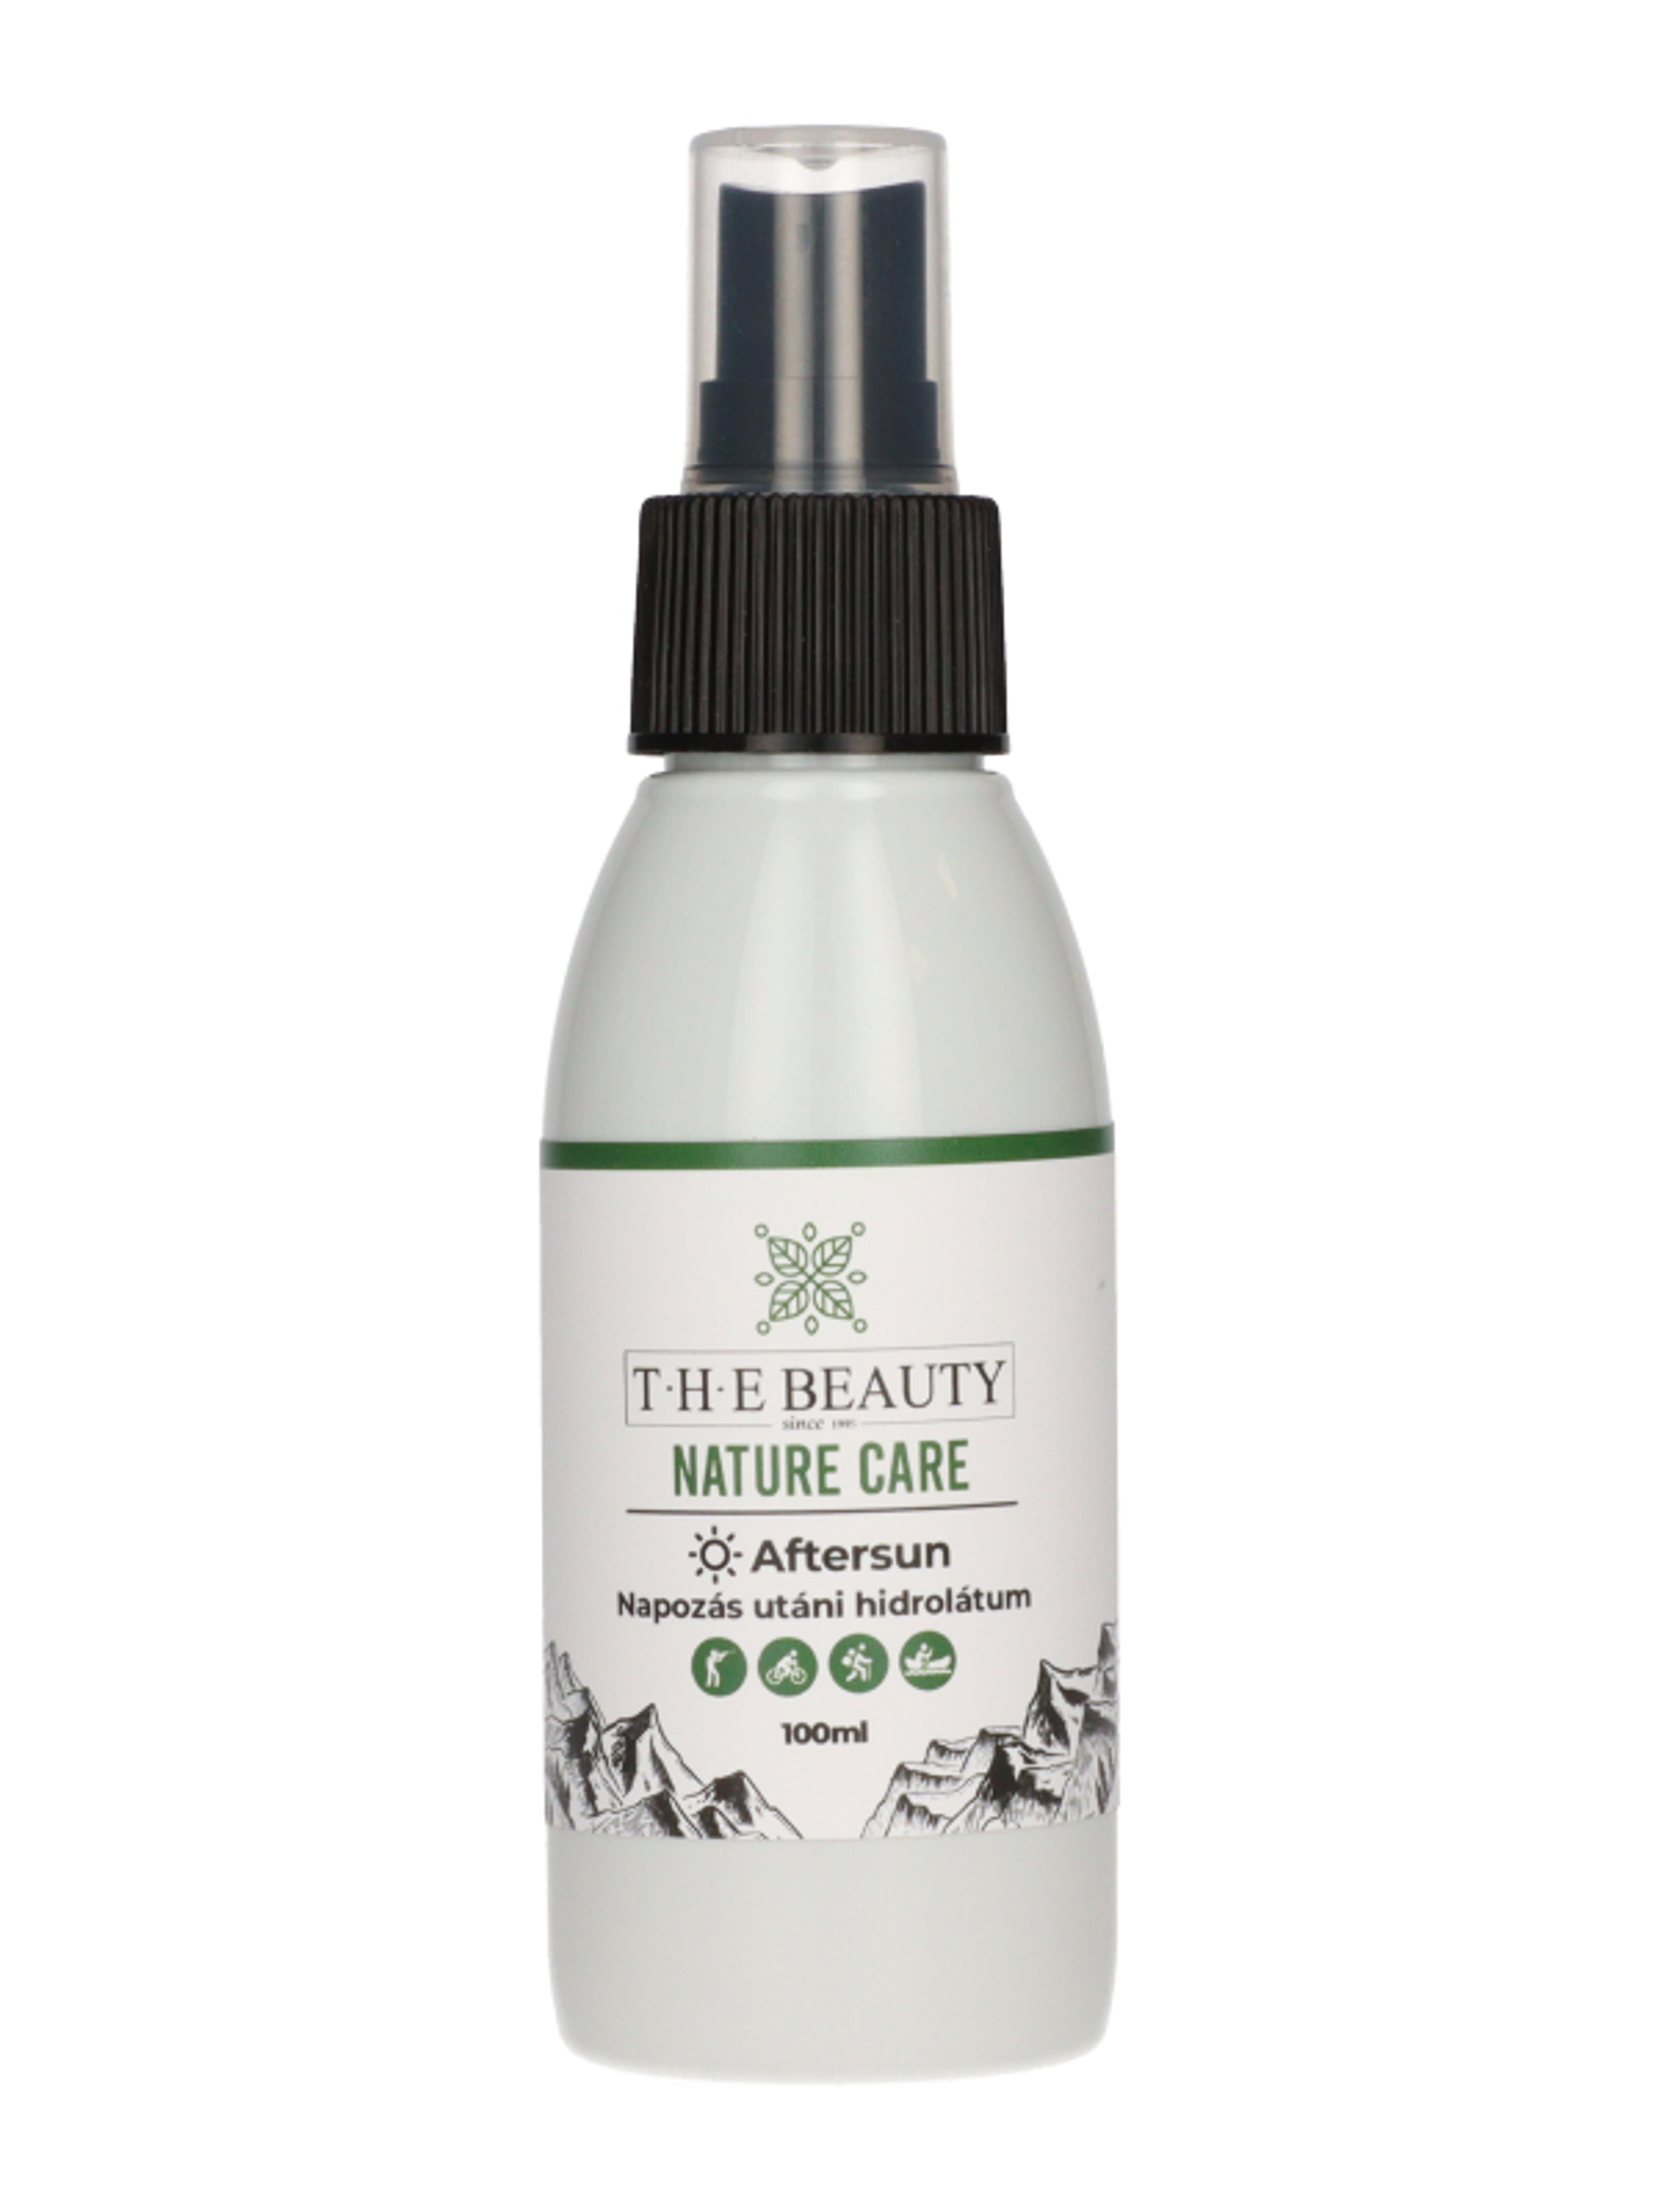 T.H.E Beauty Nature Care napozás utáni nyugtató spray - 100 ml